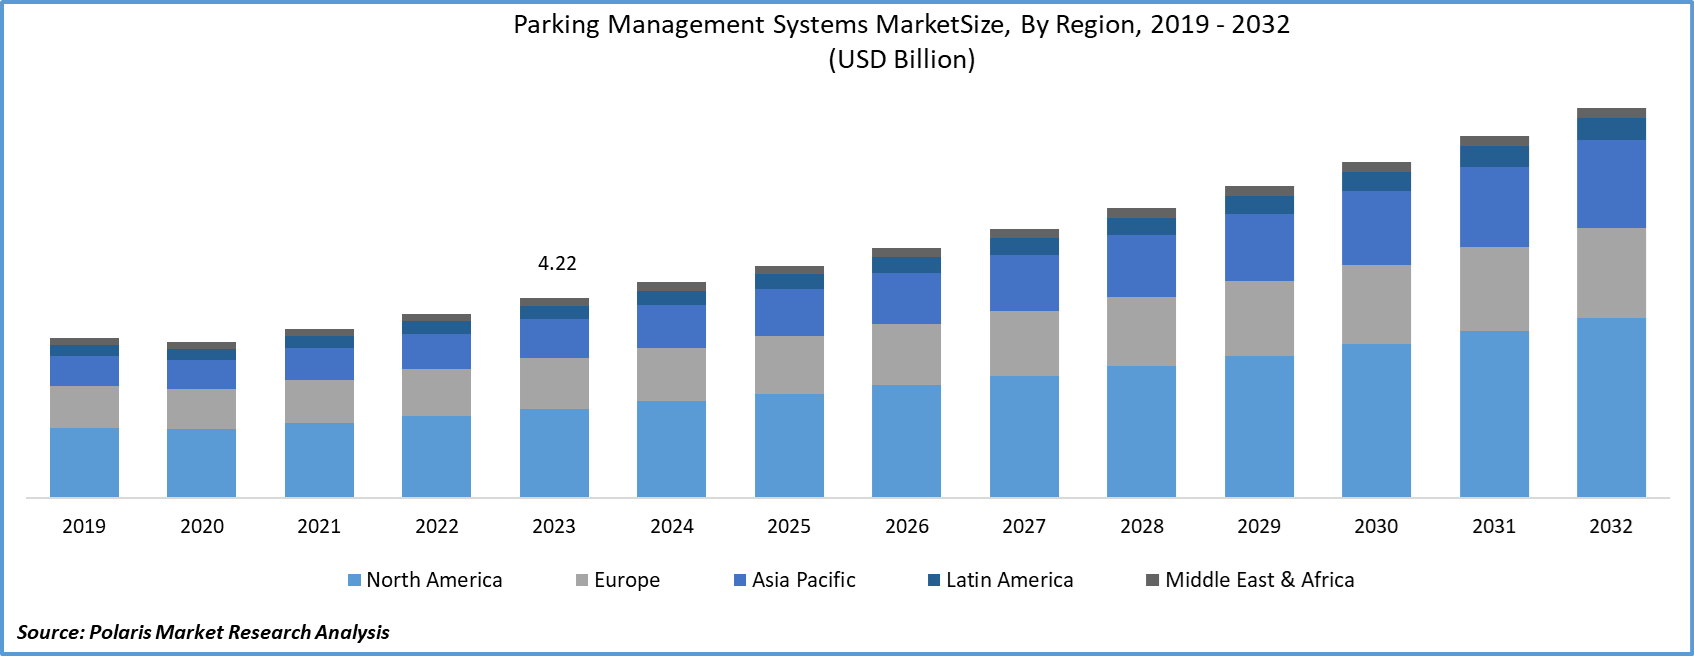 Parking Management Systems Market Size